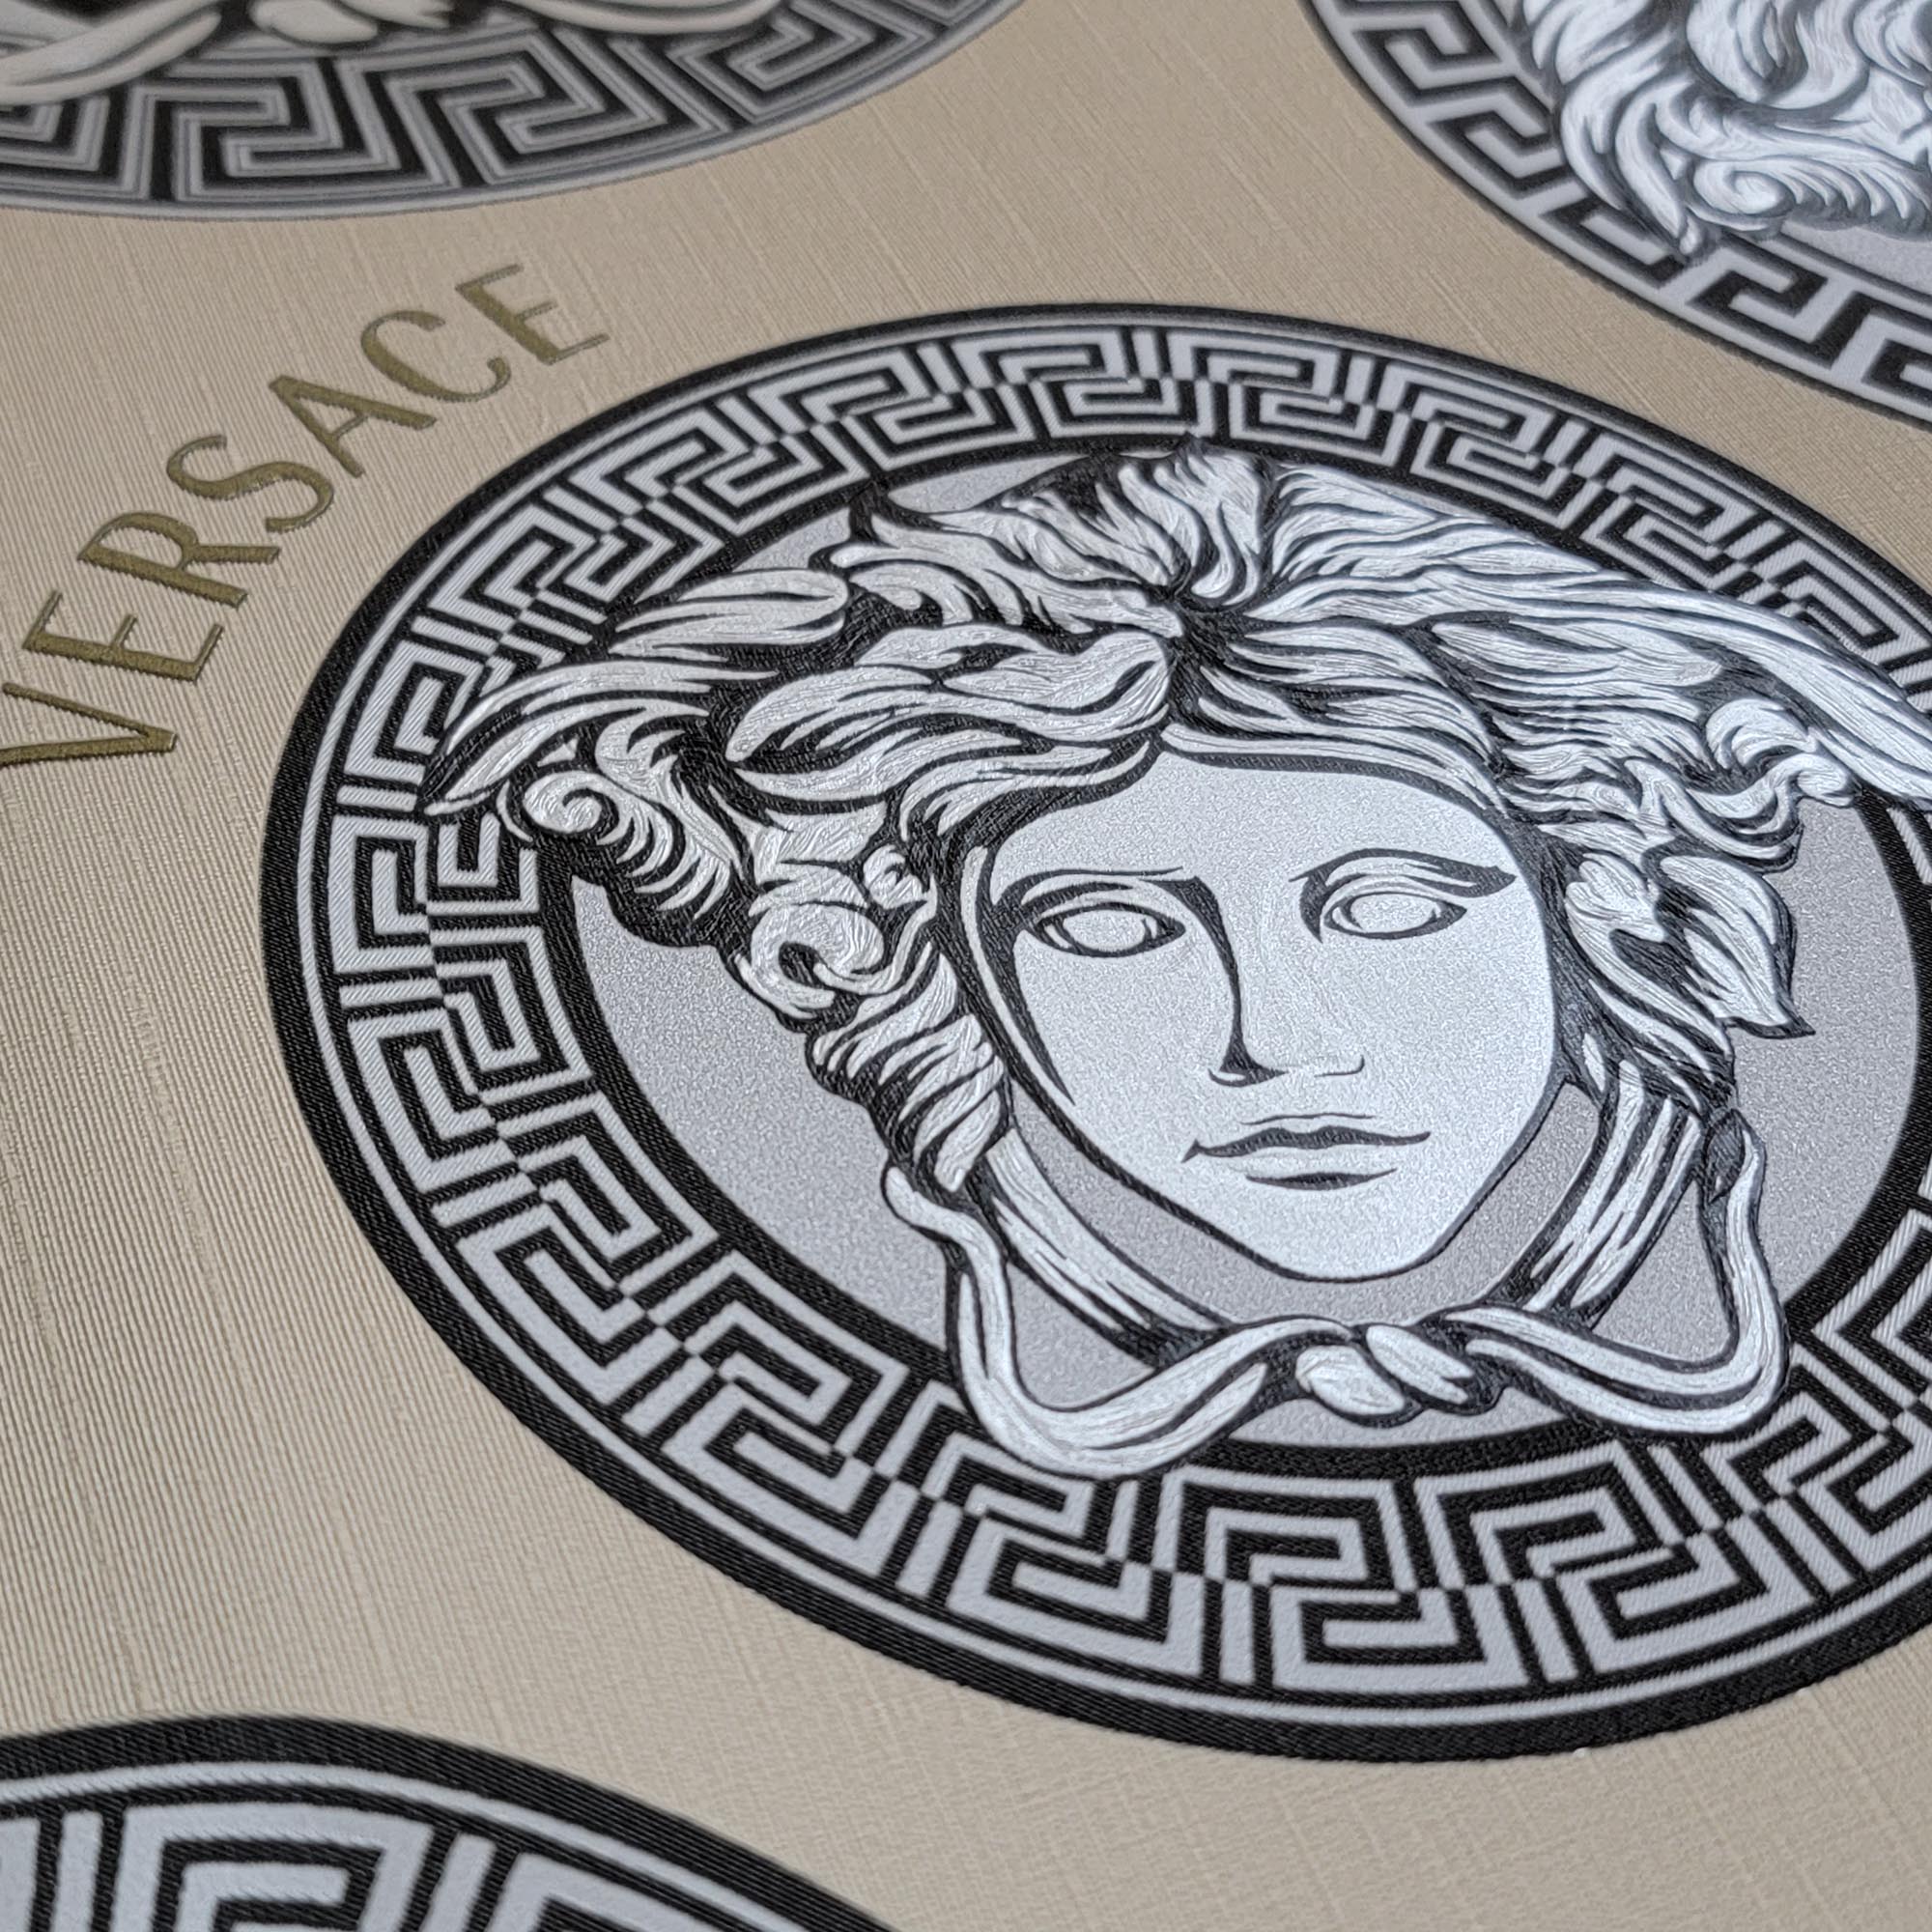 Versace Medusa Head Wallpaper, Black & Gold, 386117, Shop Wallpaper  Online, America's Best Wallpaper Selection